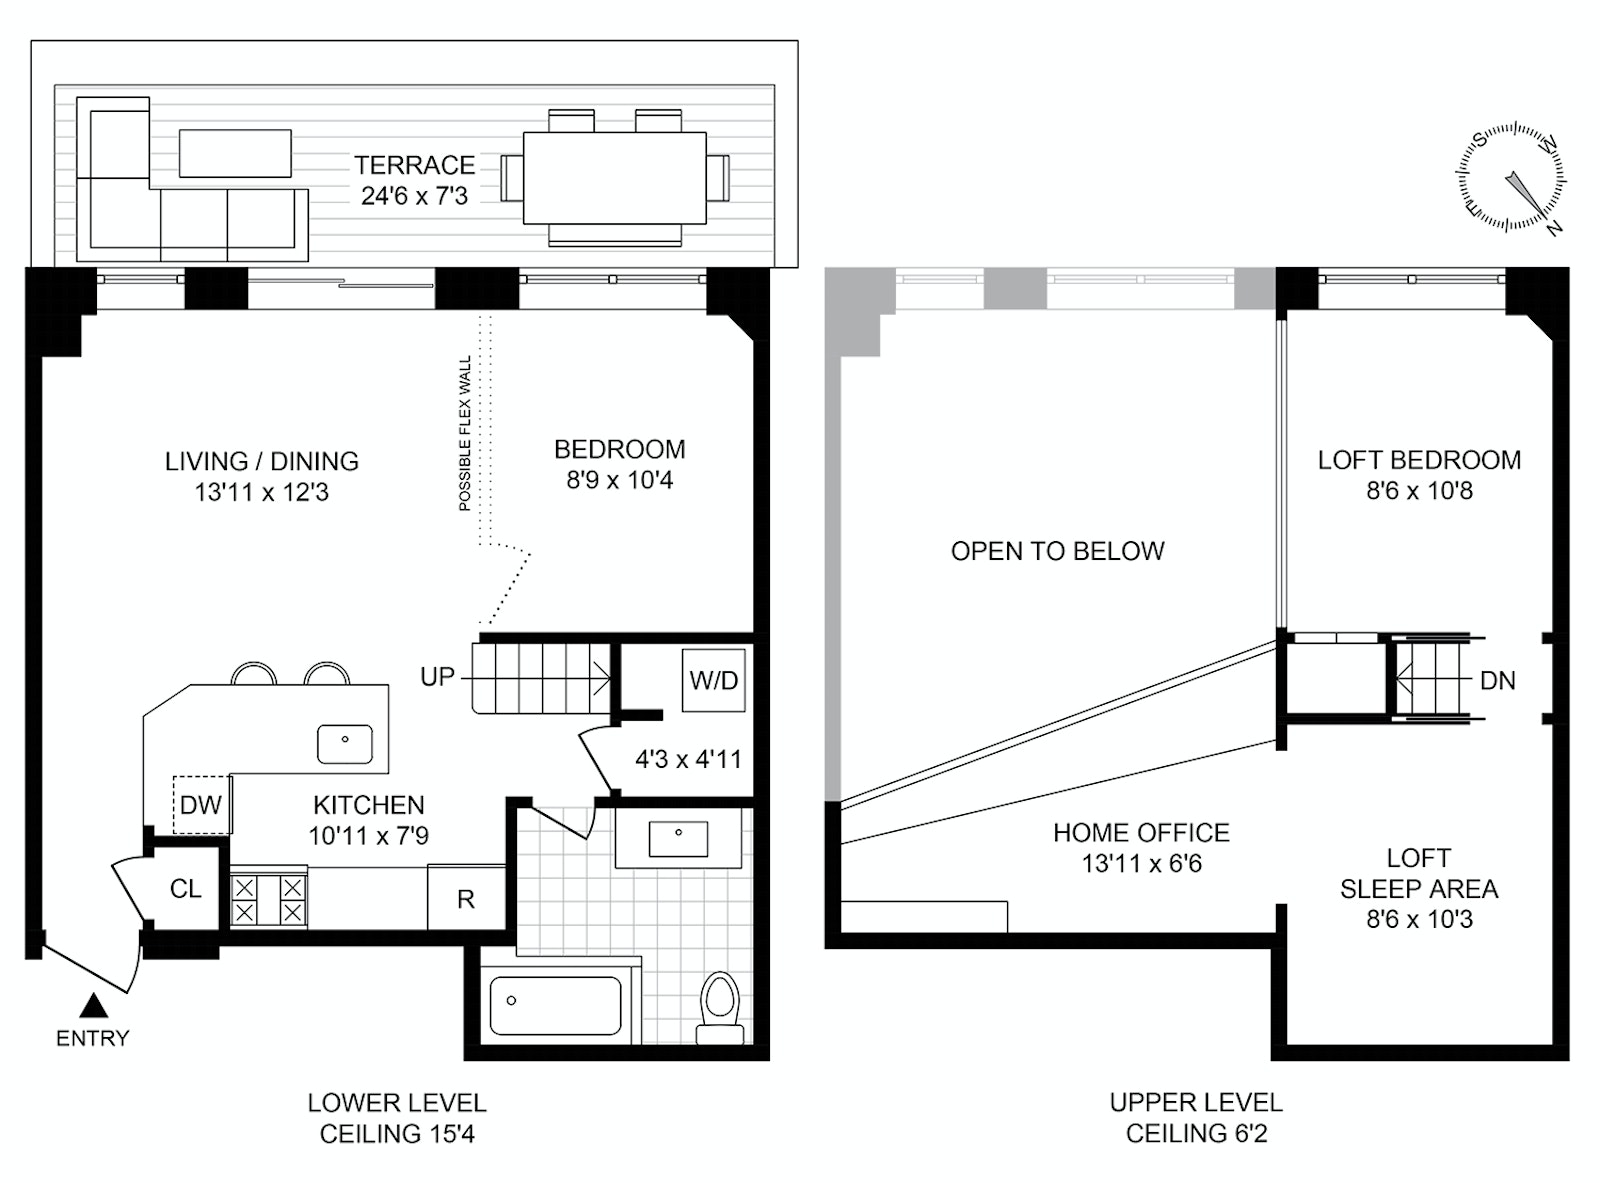 Floorplan for 135 N 9th St